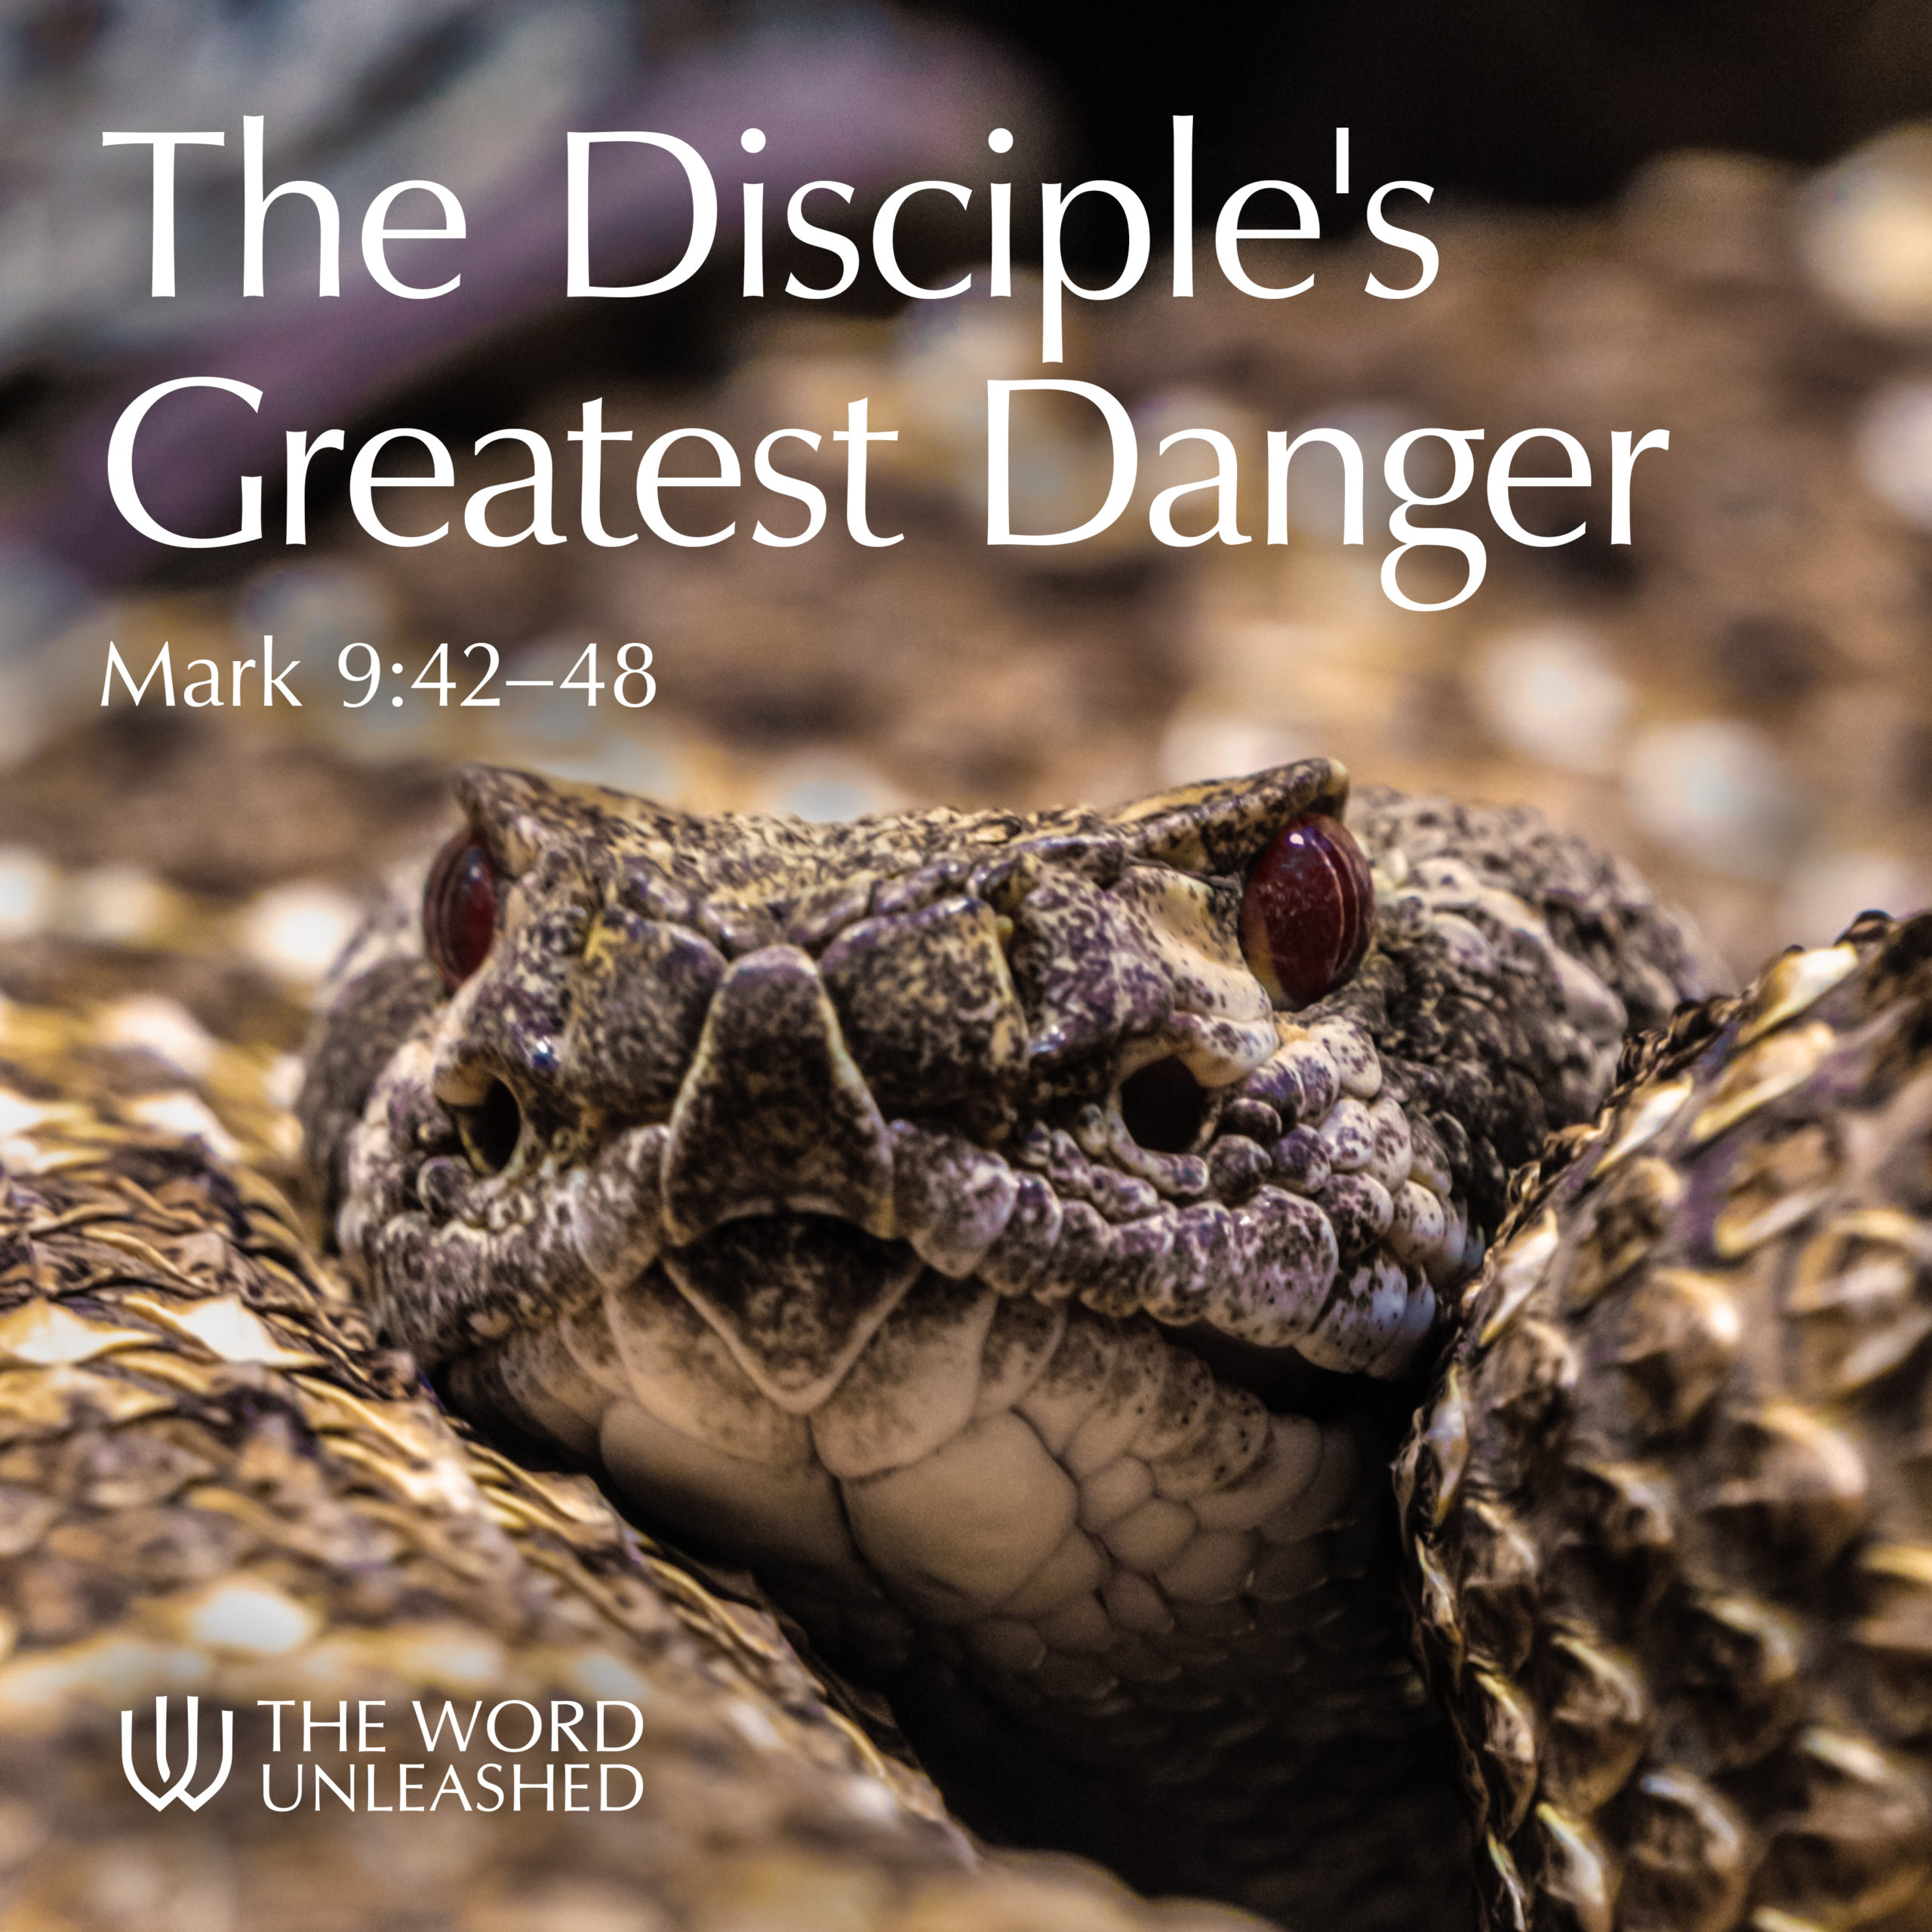 The Disciple's Greatest Danger